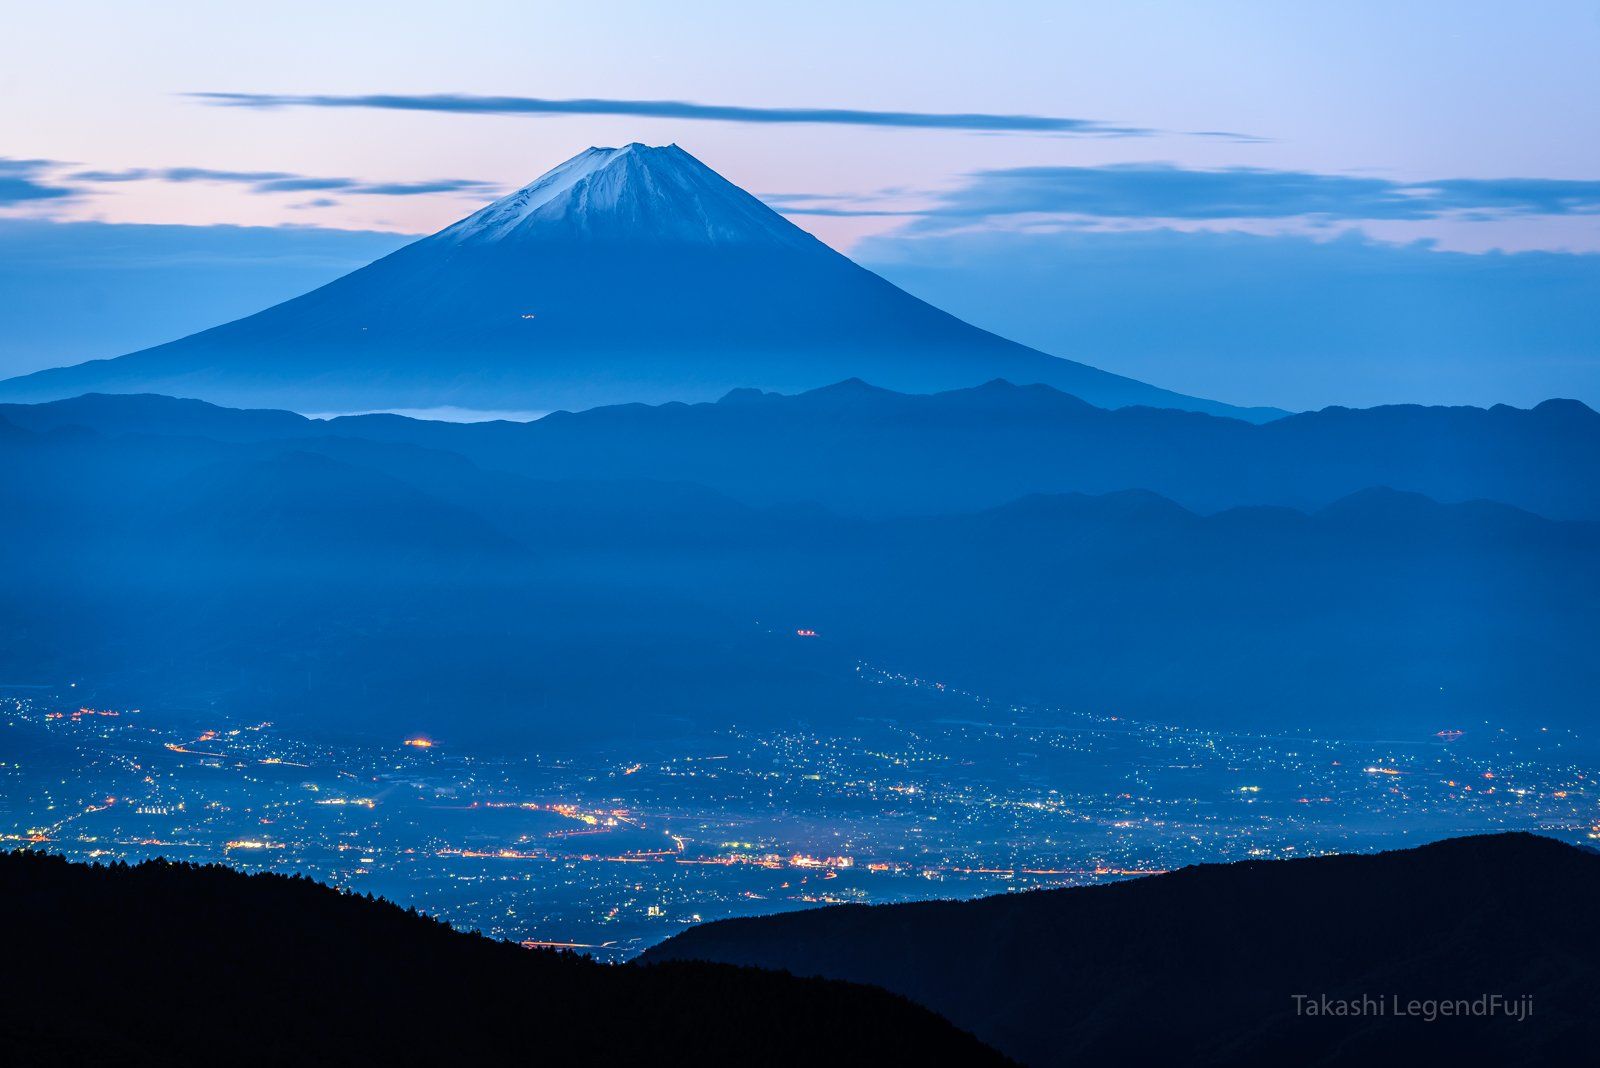 Fuji,mountain,Japan,blue,cloud,summit,snow,light,dawn,sunrise,, Takashi